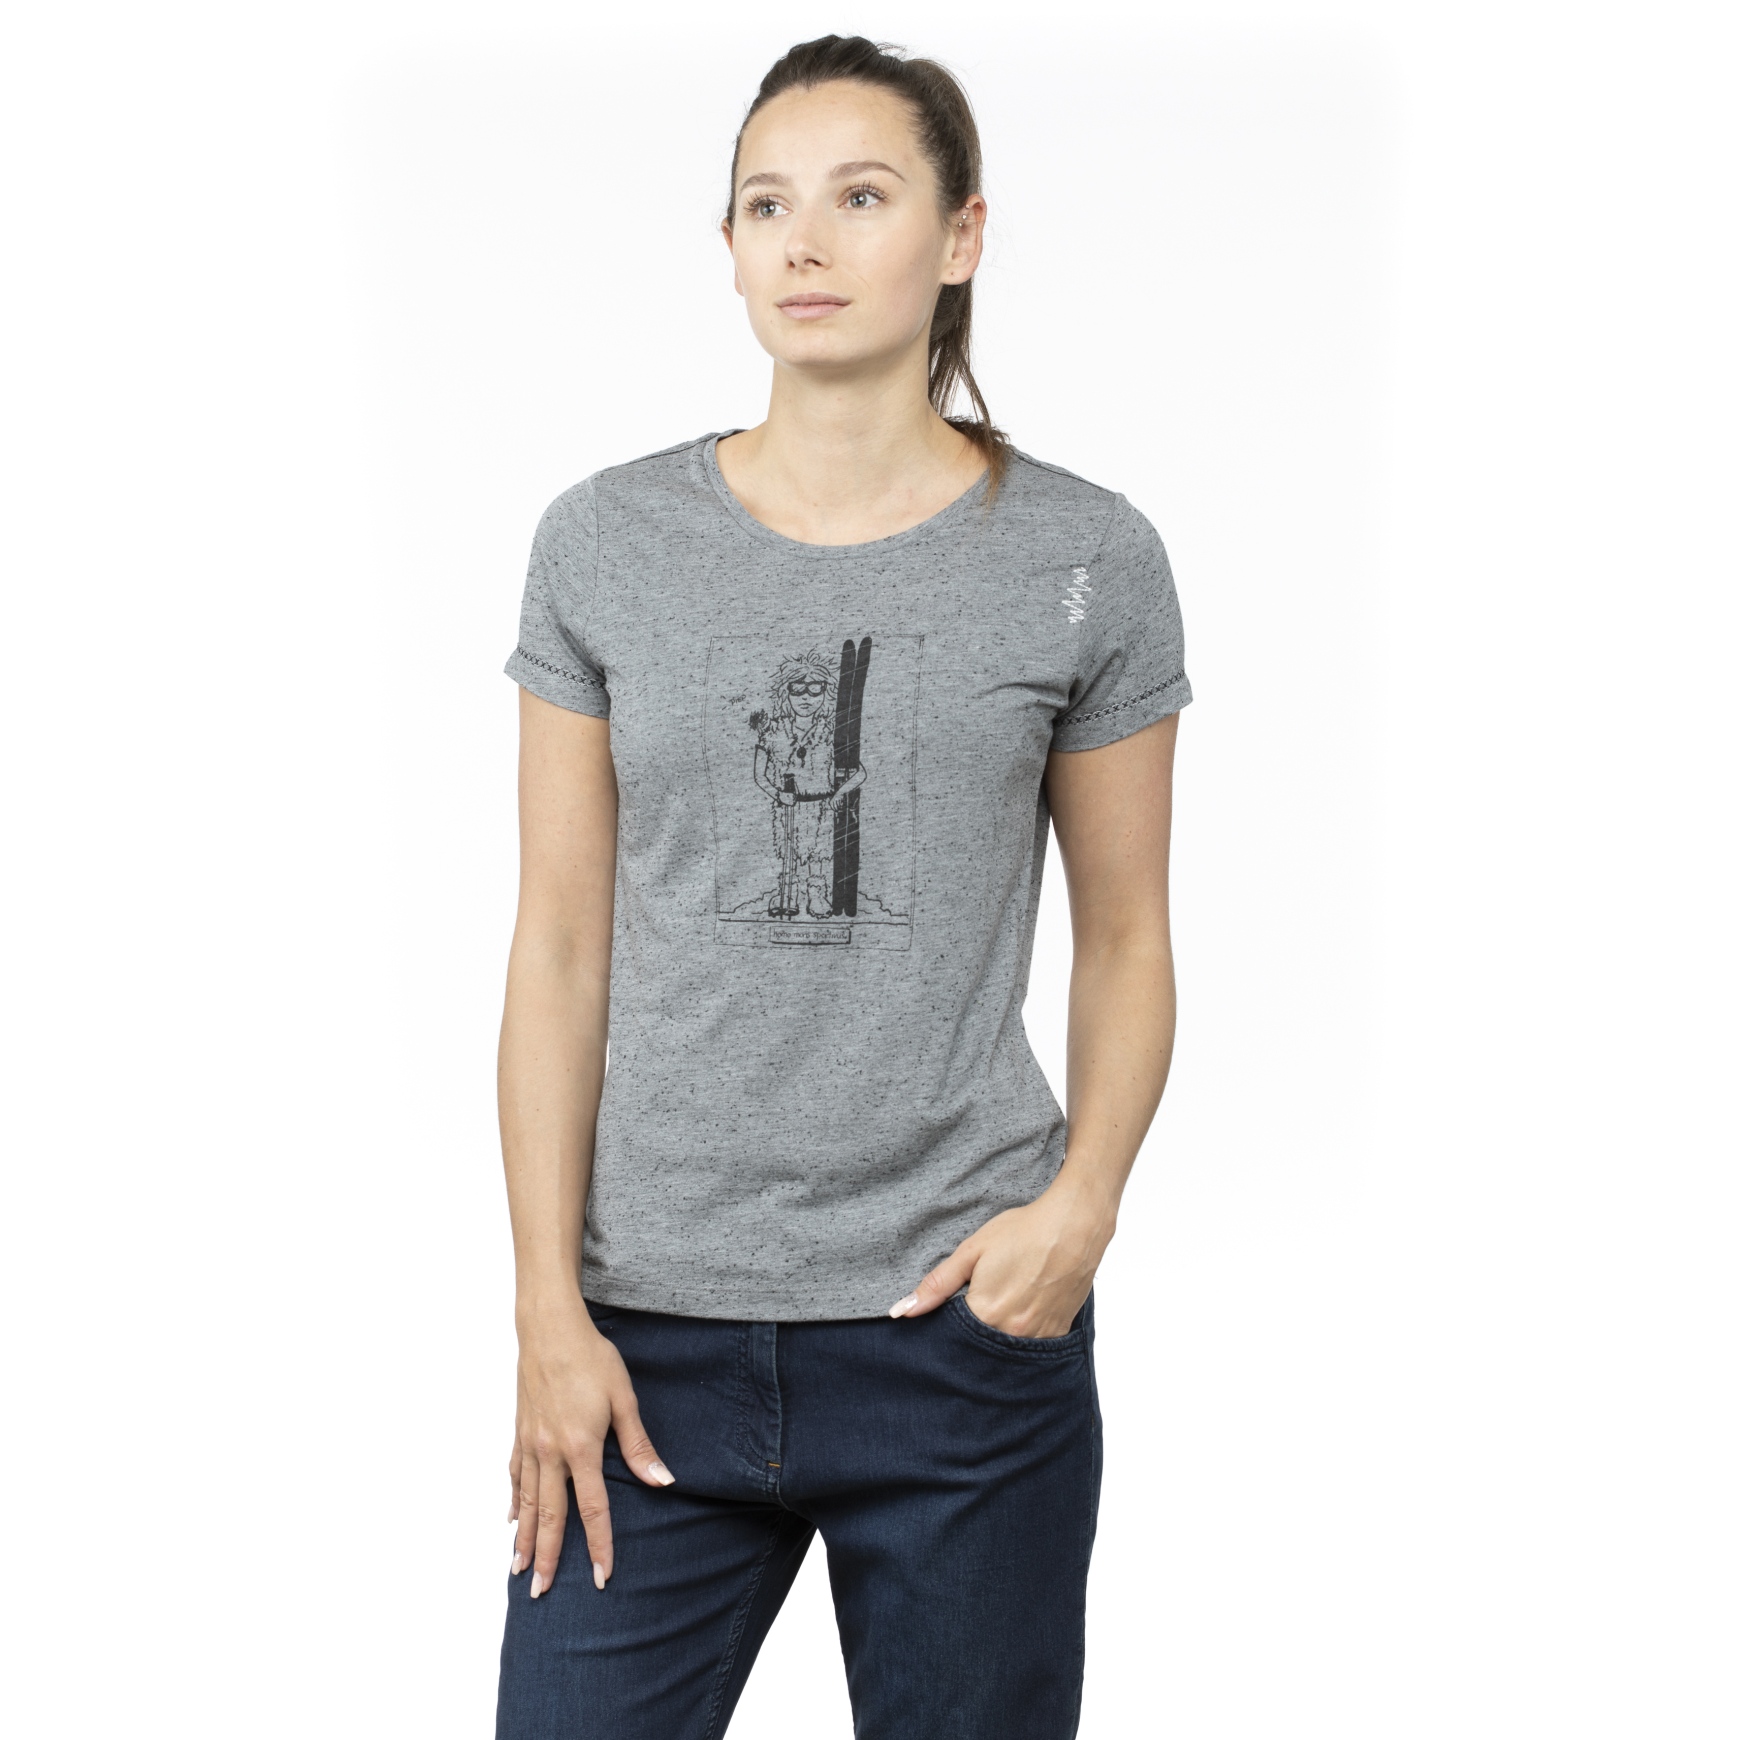 Picture of Chillaz Saile Homo Mons Sportivus Femi T-Shirt Women - dark grey melange